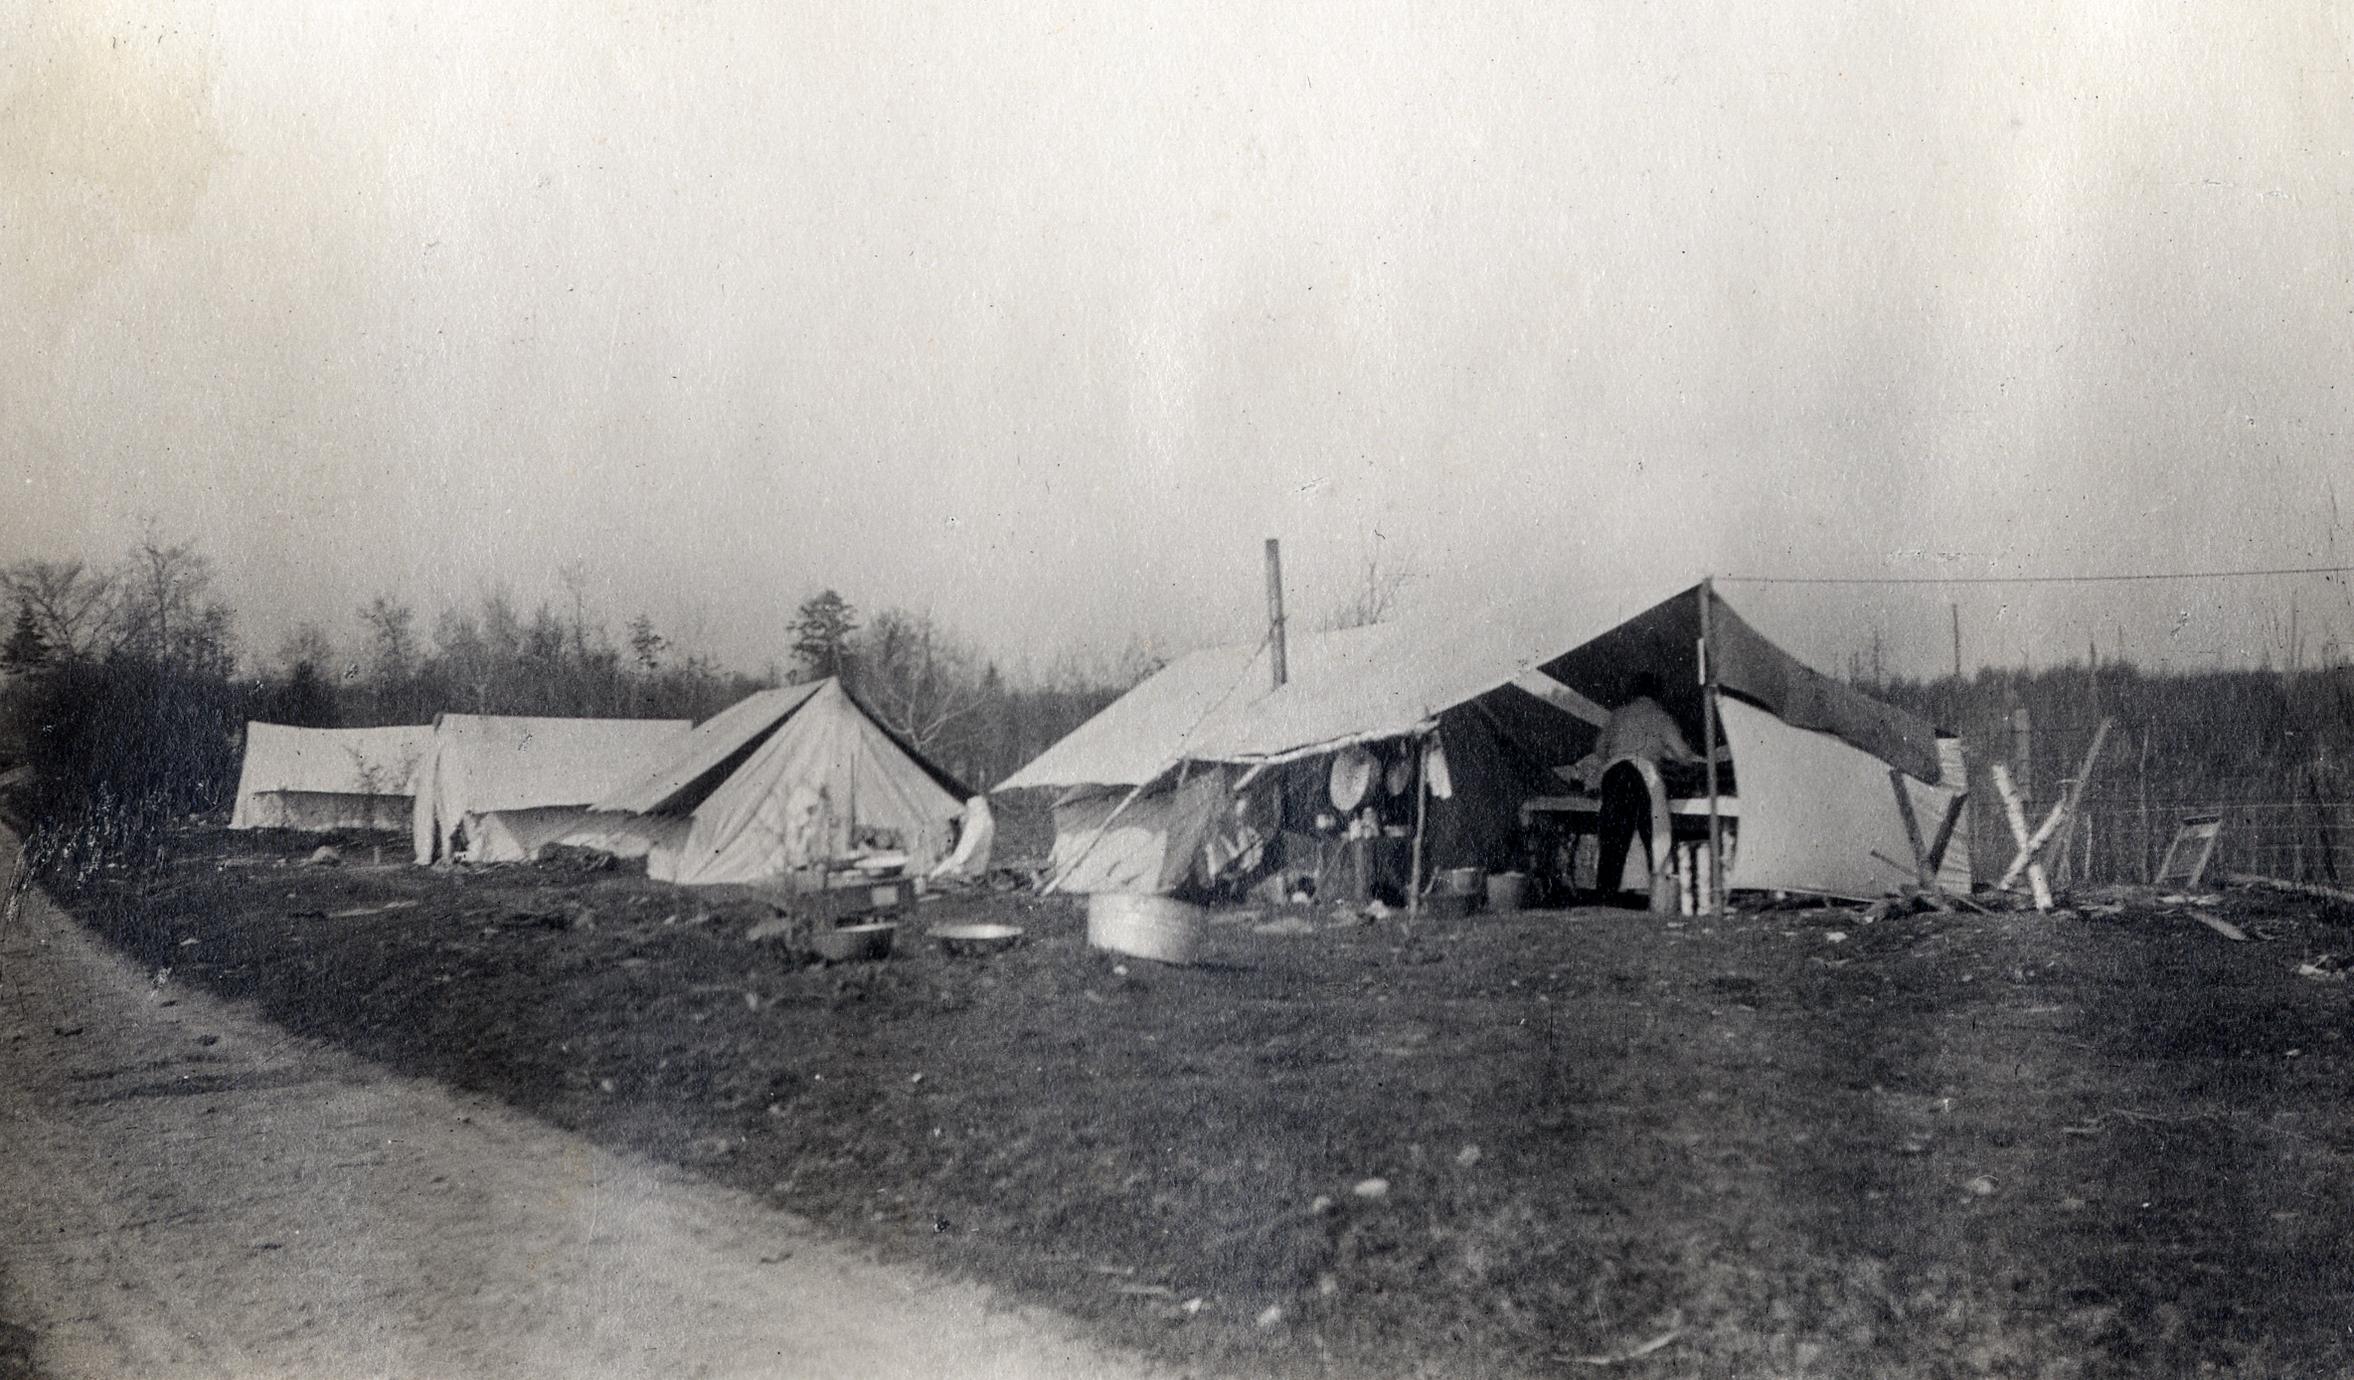 Camp in Chippewa County